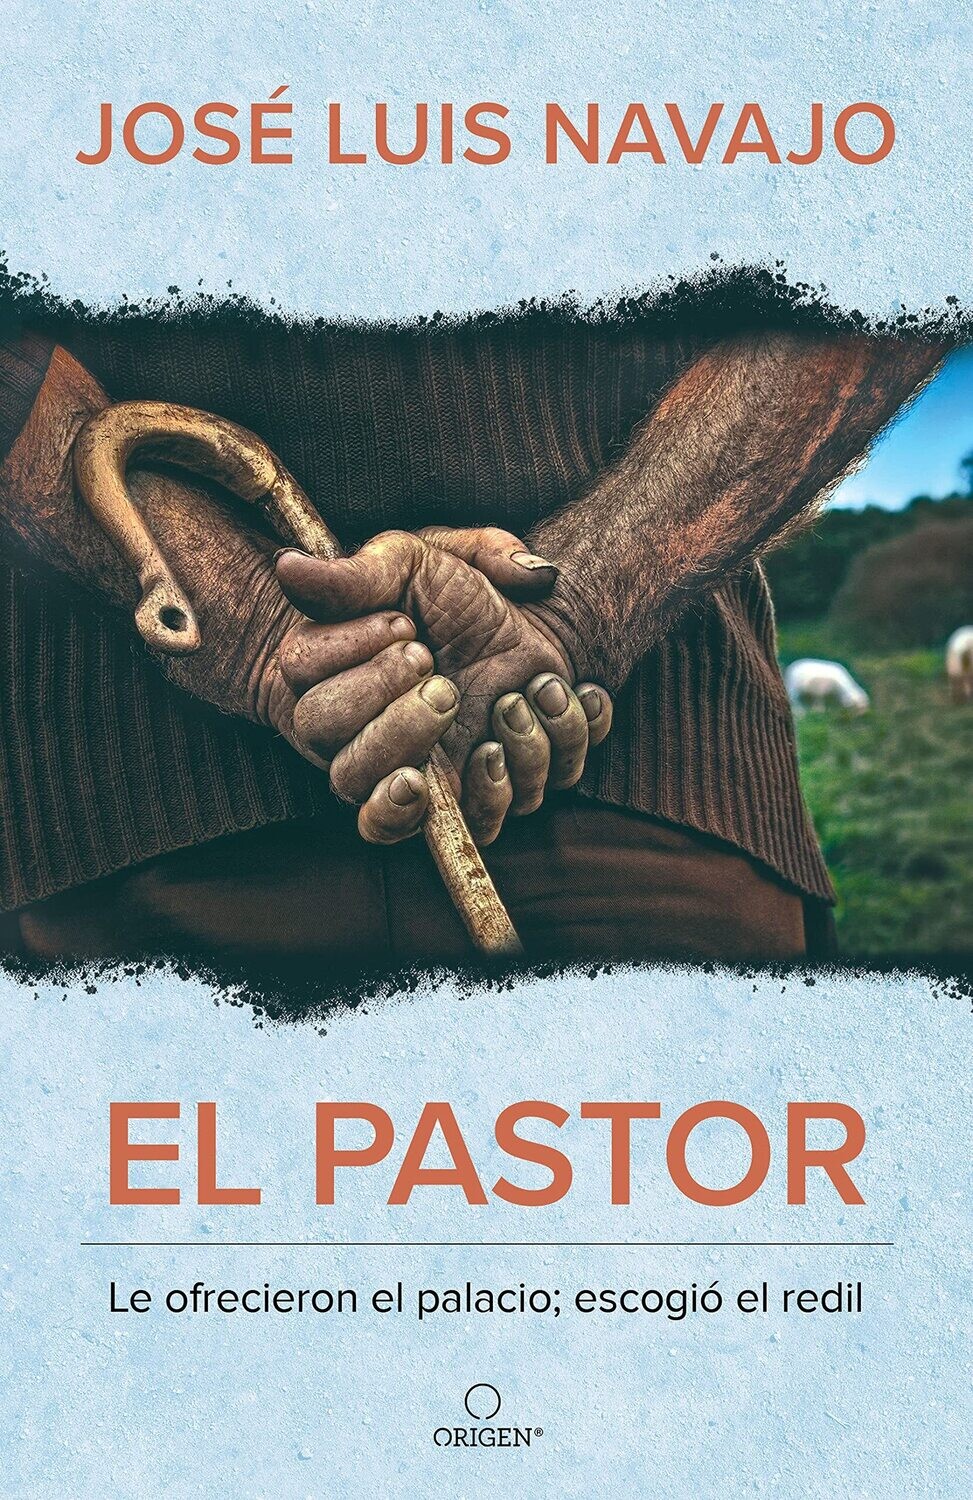 El Pastor (Free Shipping)